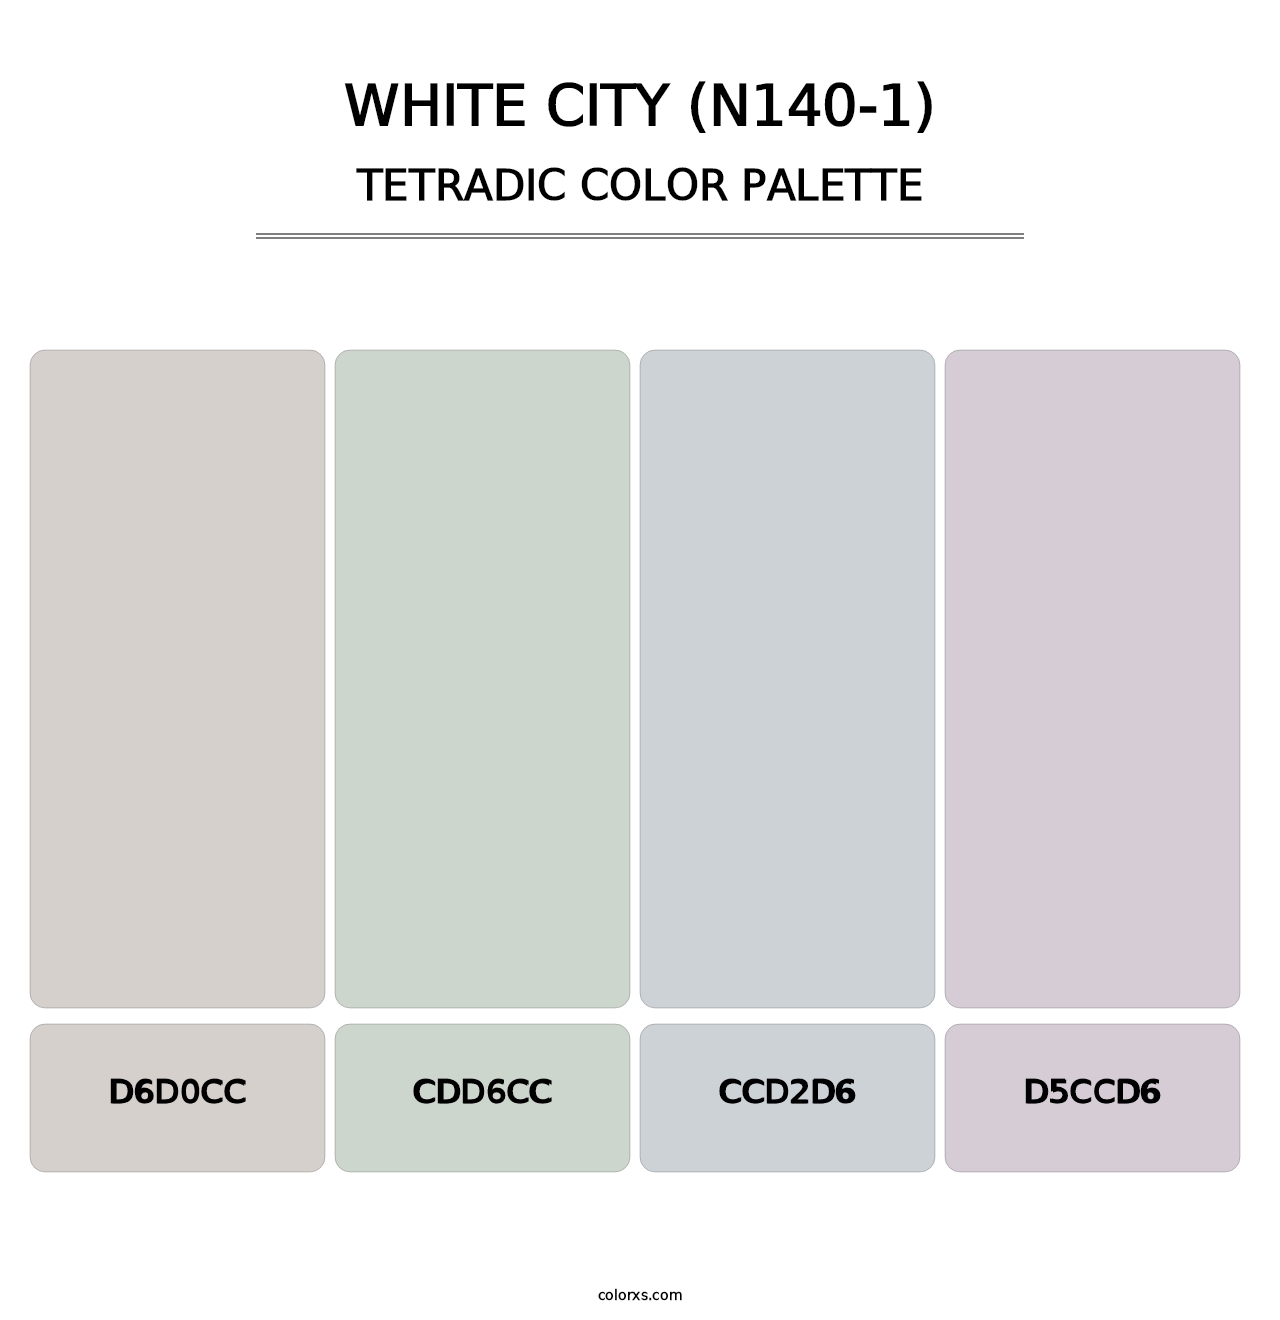 White City (N140-1) - Tetradic Color Palette